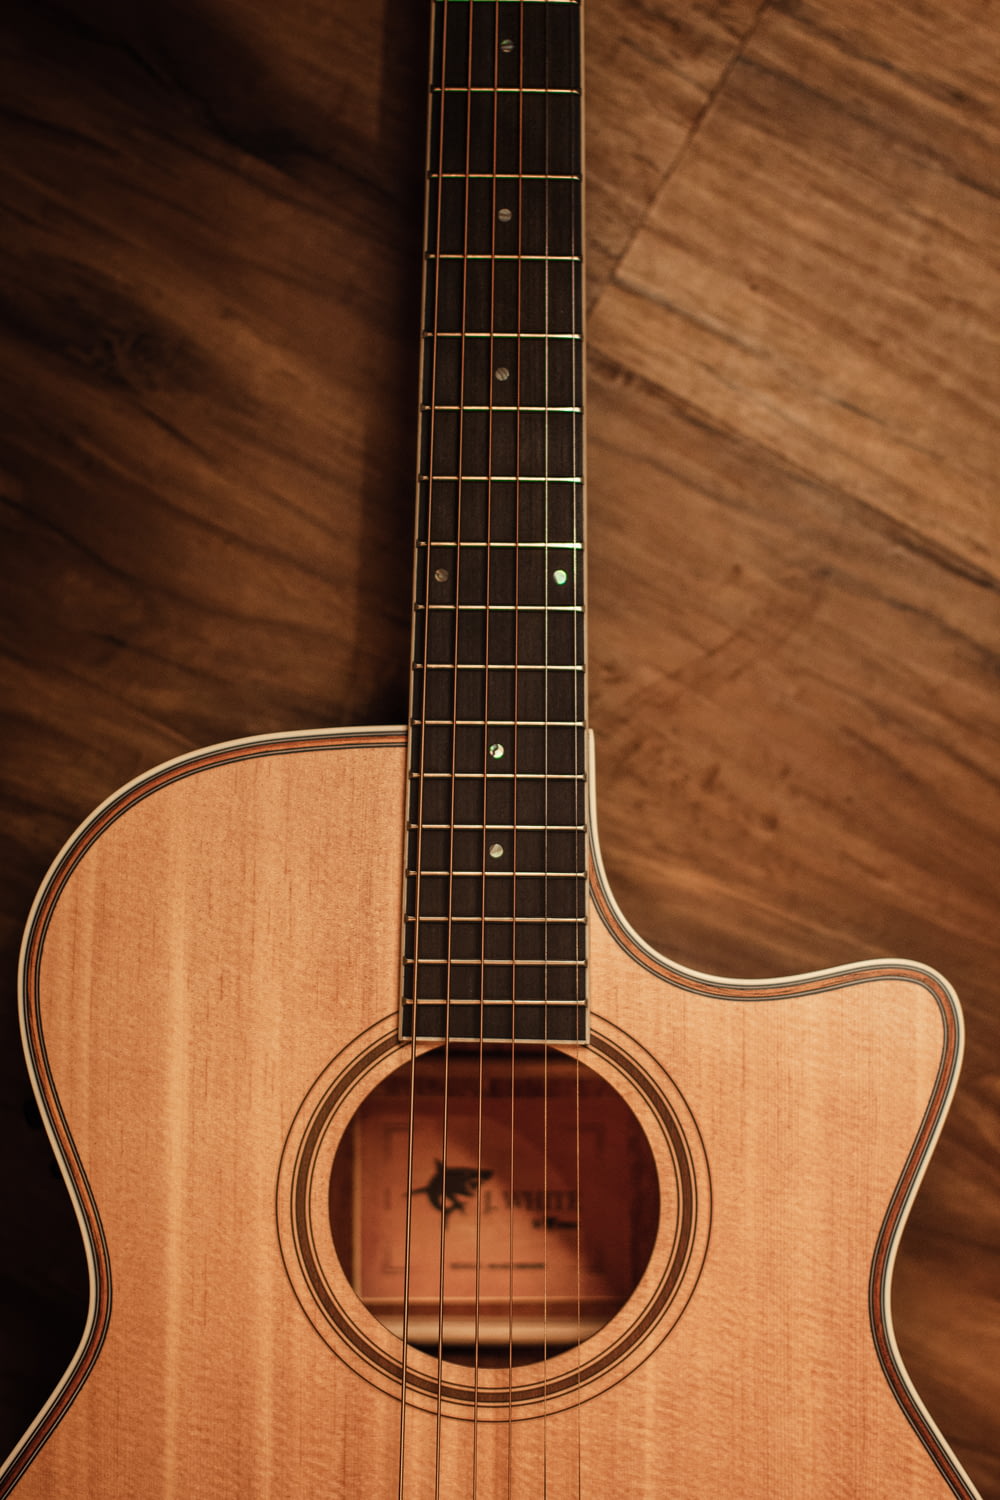 braune Akustikgitarre auf braunem Holzboden